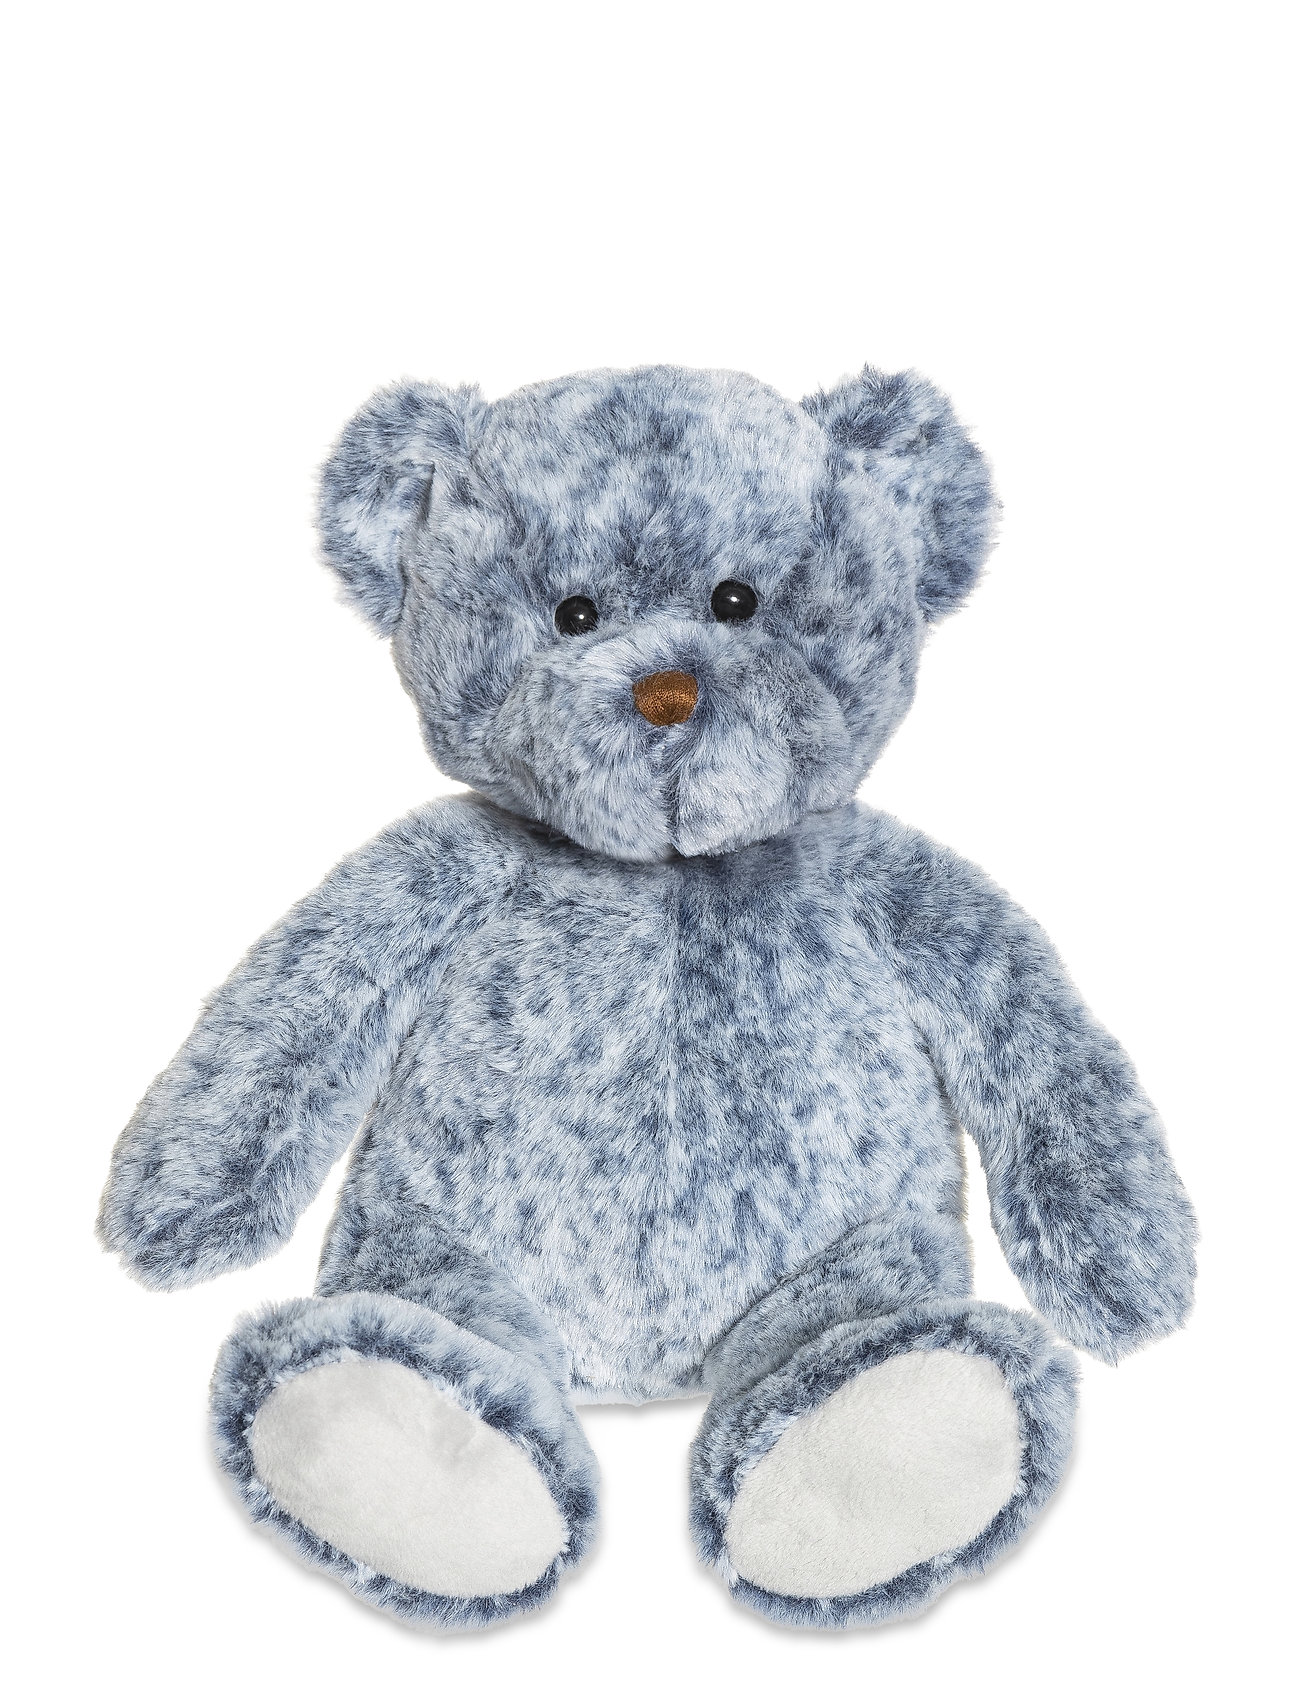 Nalle, Blåbär Toys Soft Toys Teddy Bears Blå Teddykompaniet